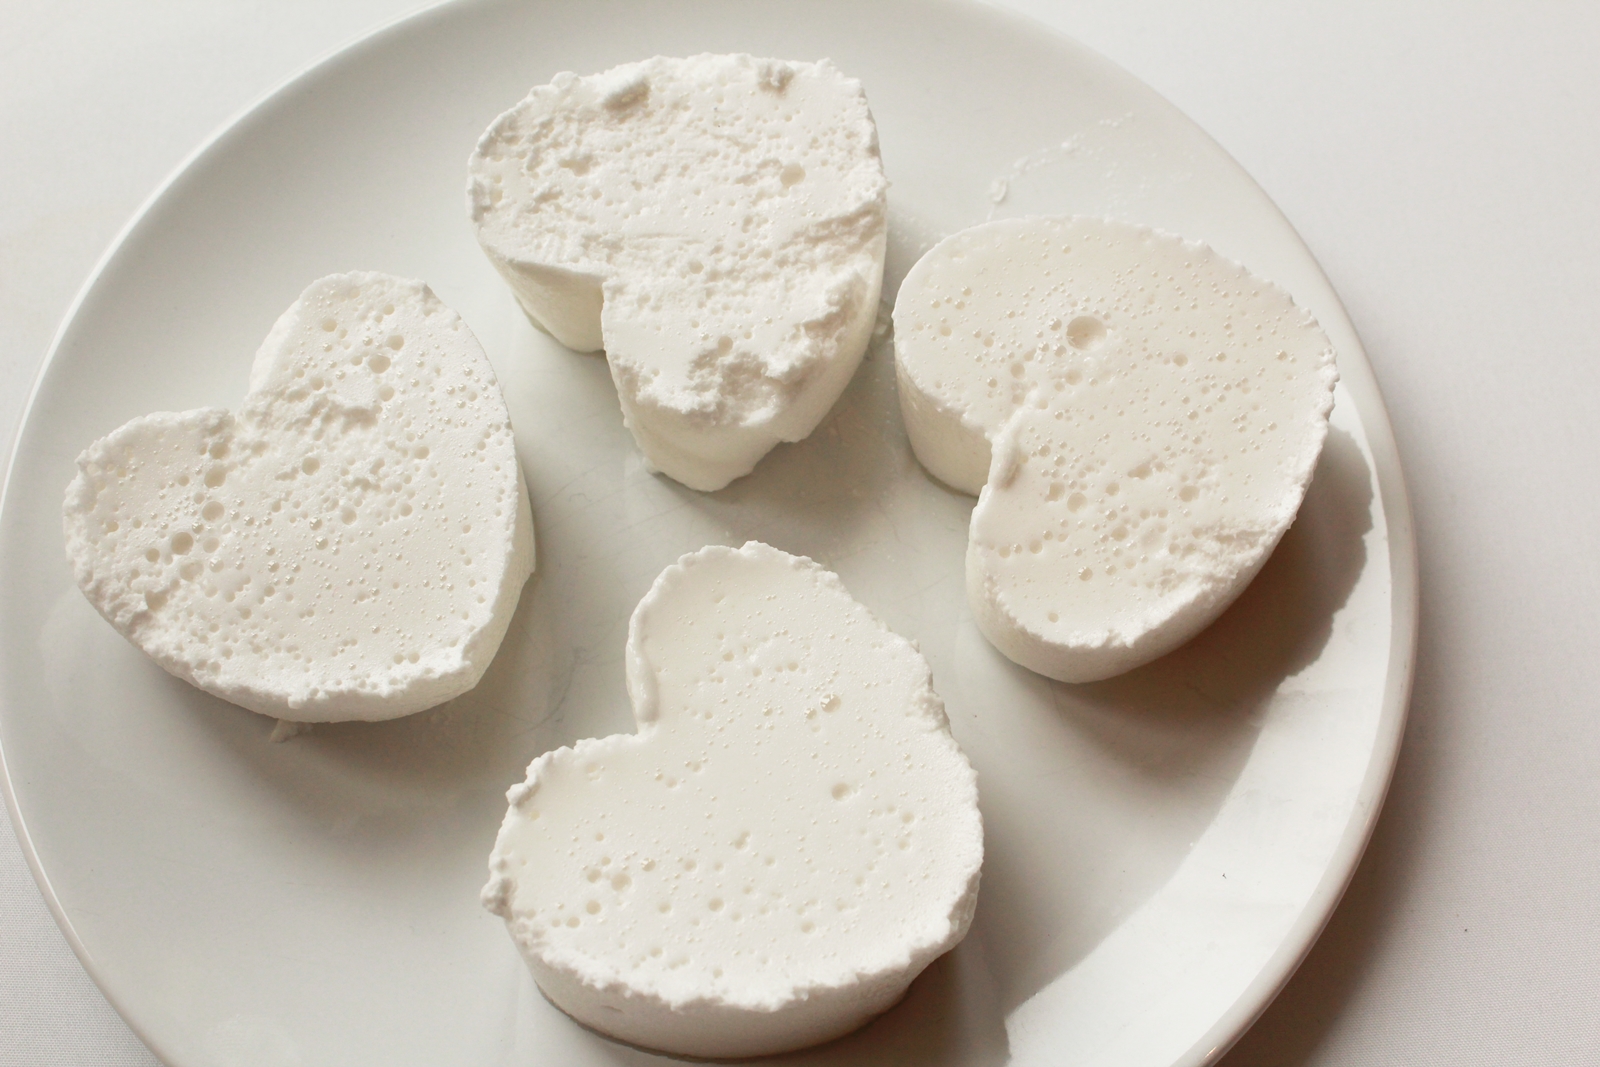 https://twirlingbetty.files.wordpress.com/2012/07/heart-shaped-marshmallows-on-plate.jpg